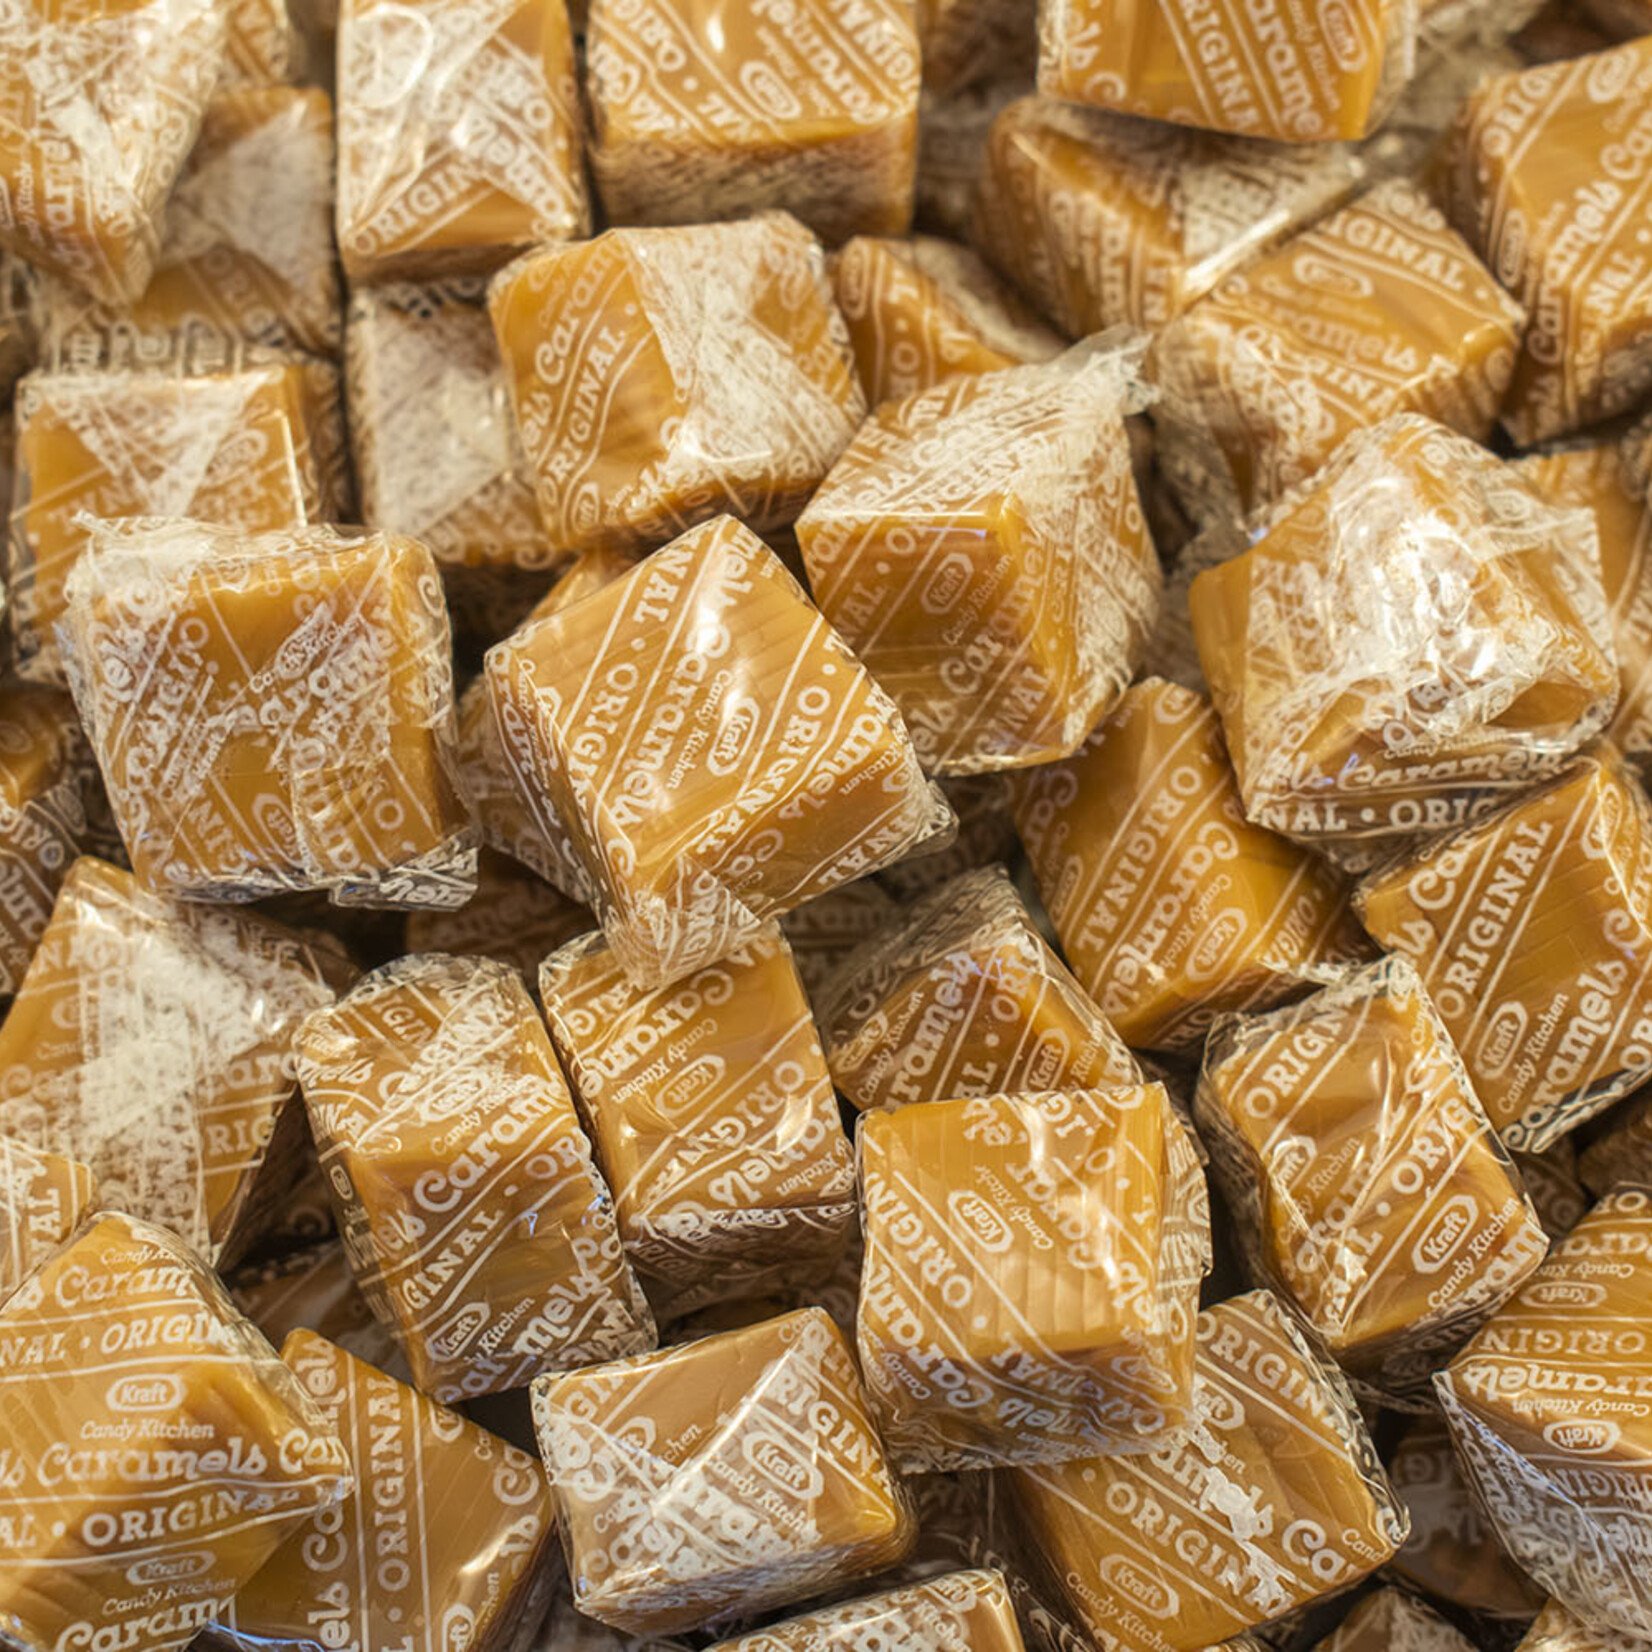 Flan caramel Haribo - Bonbons années 80 - Génération Souvenirs